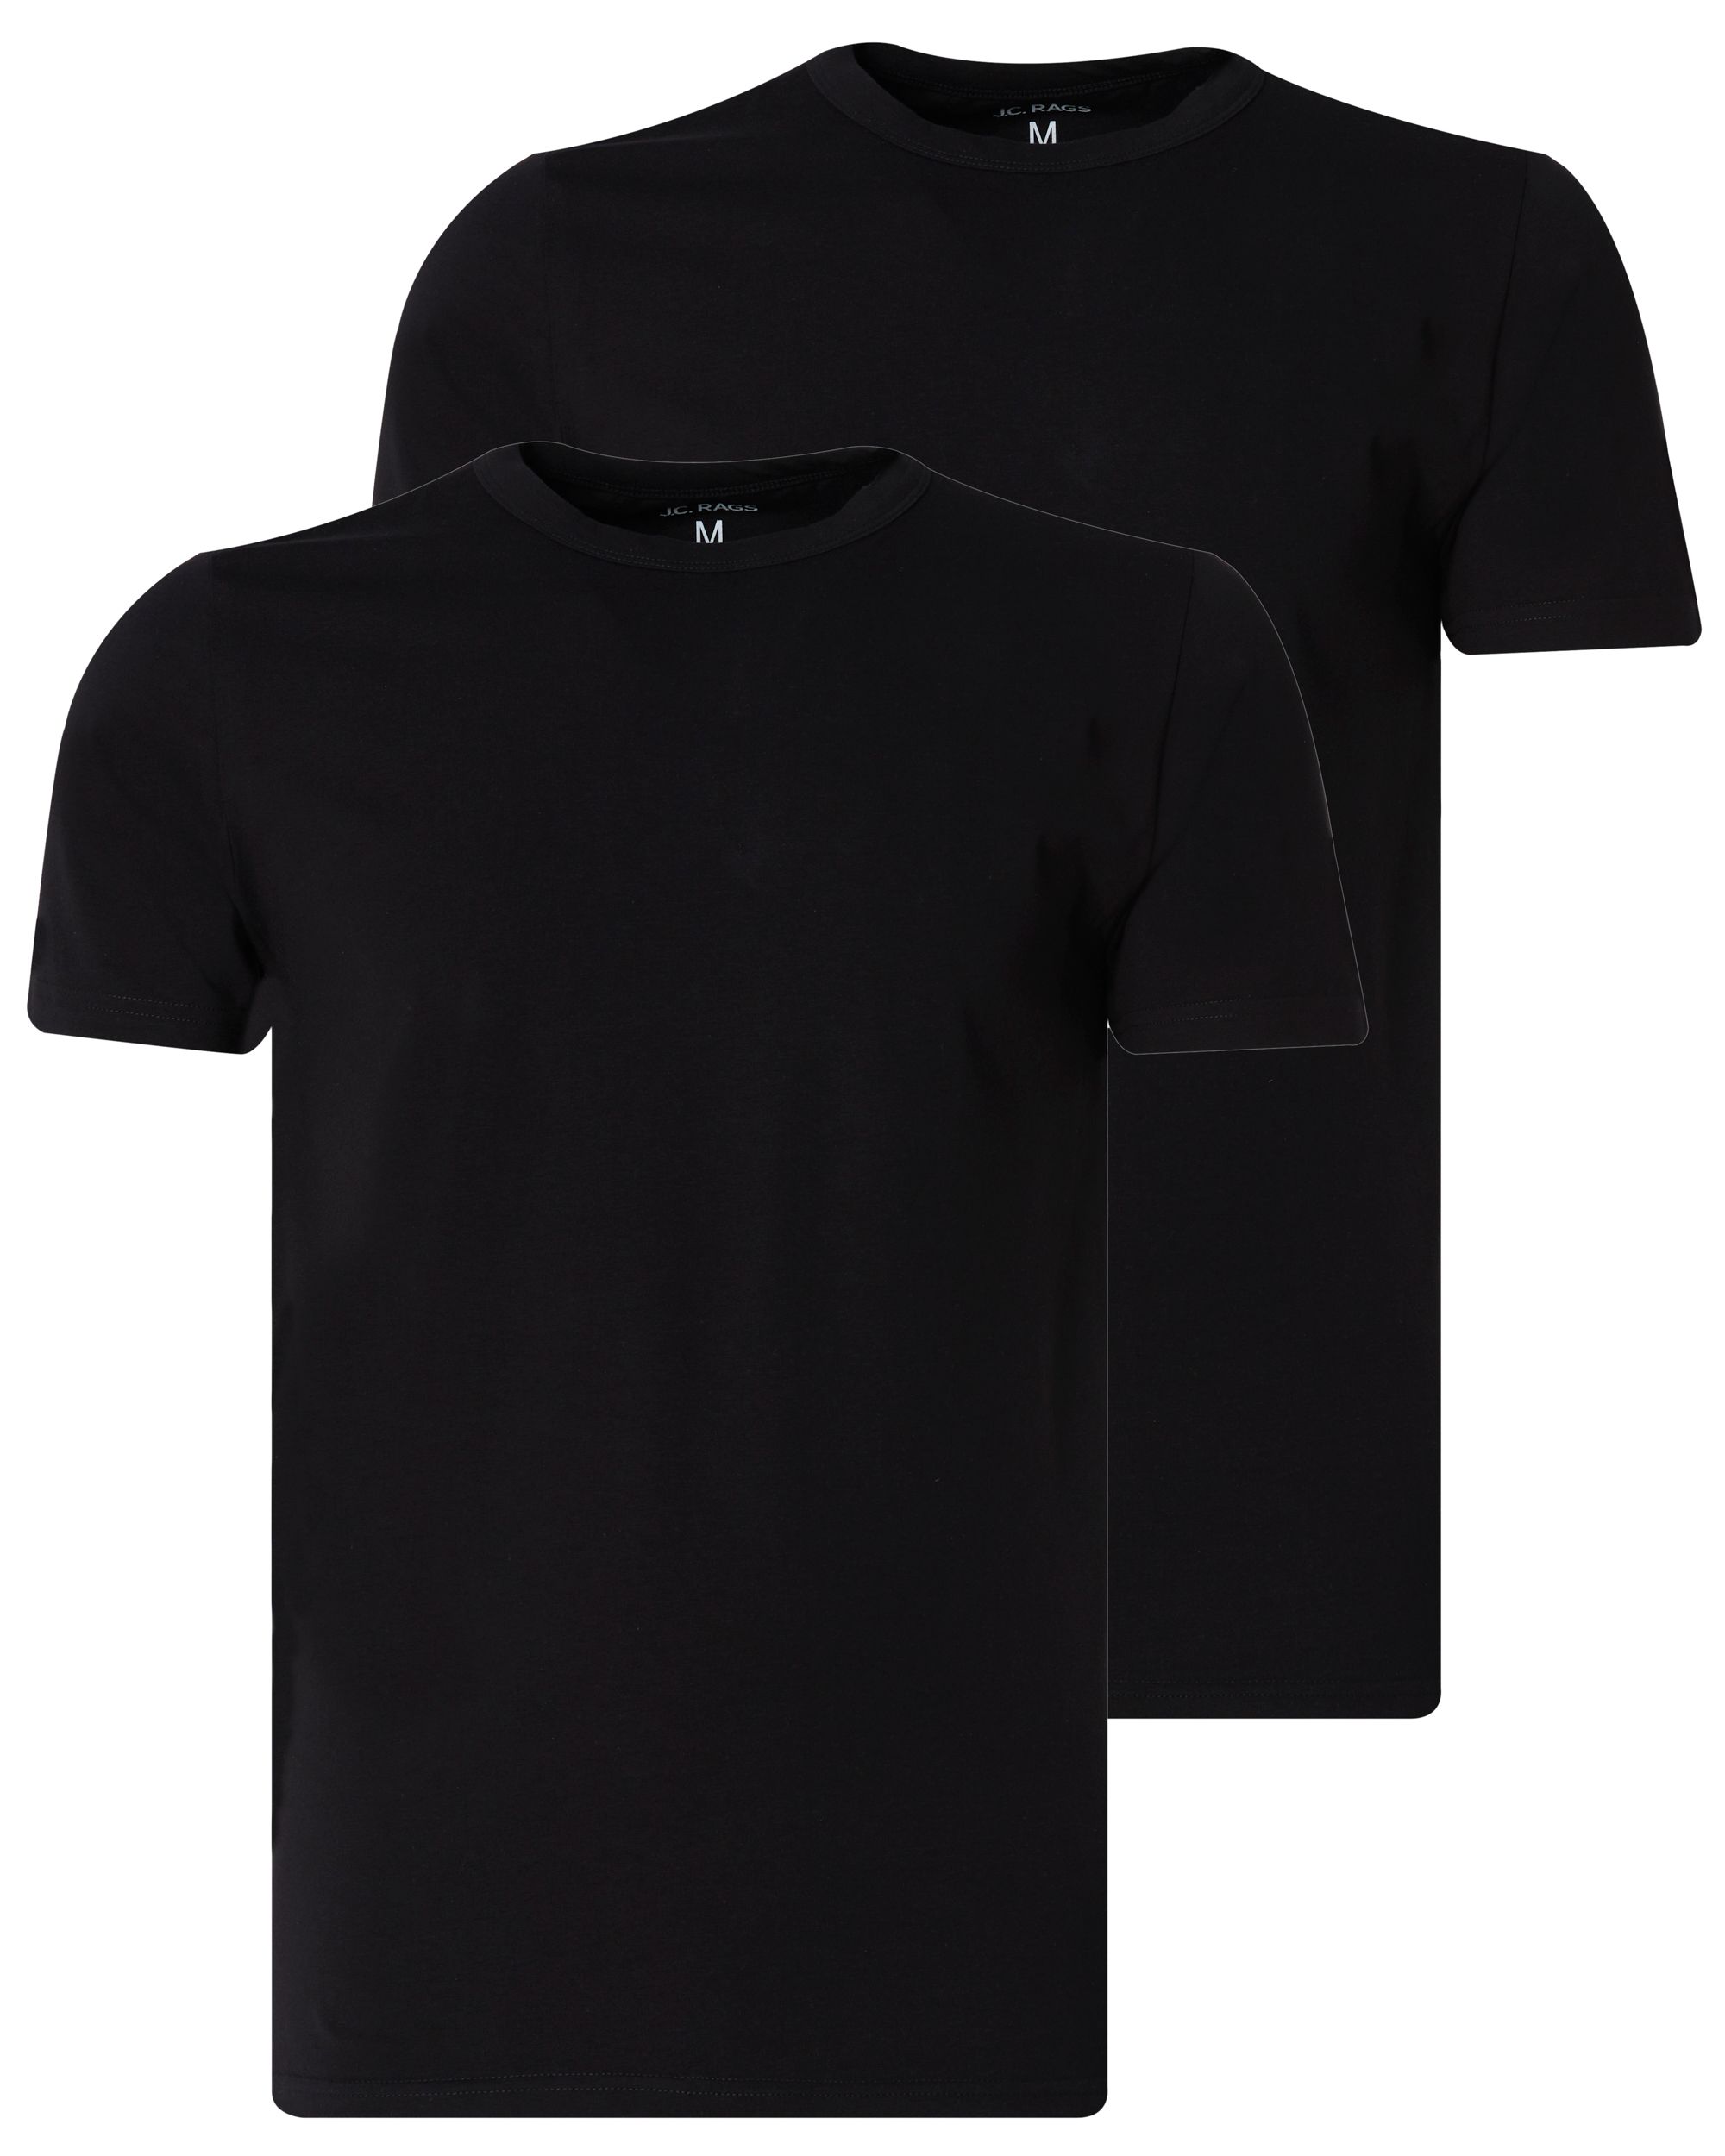 J.C. RAGS Basic T-shirt KM 2-pack Black 081603-001-L